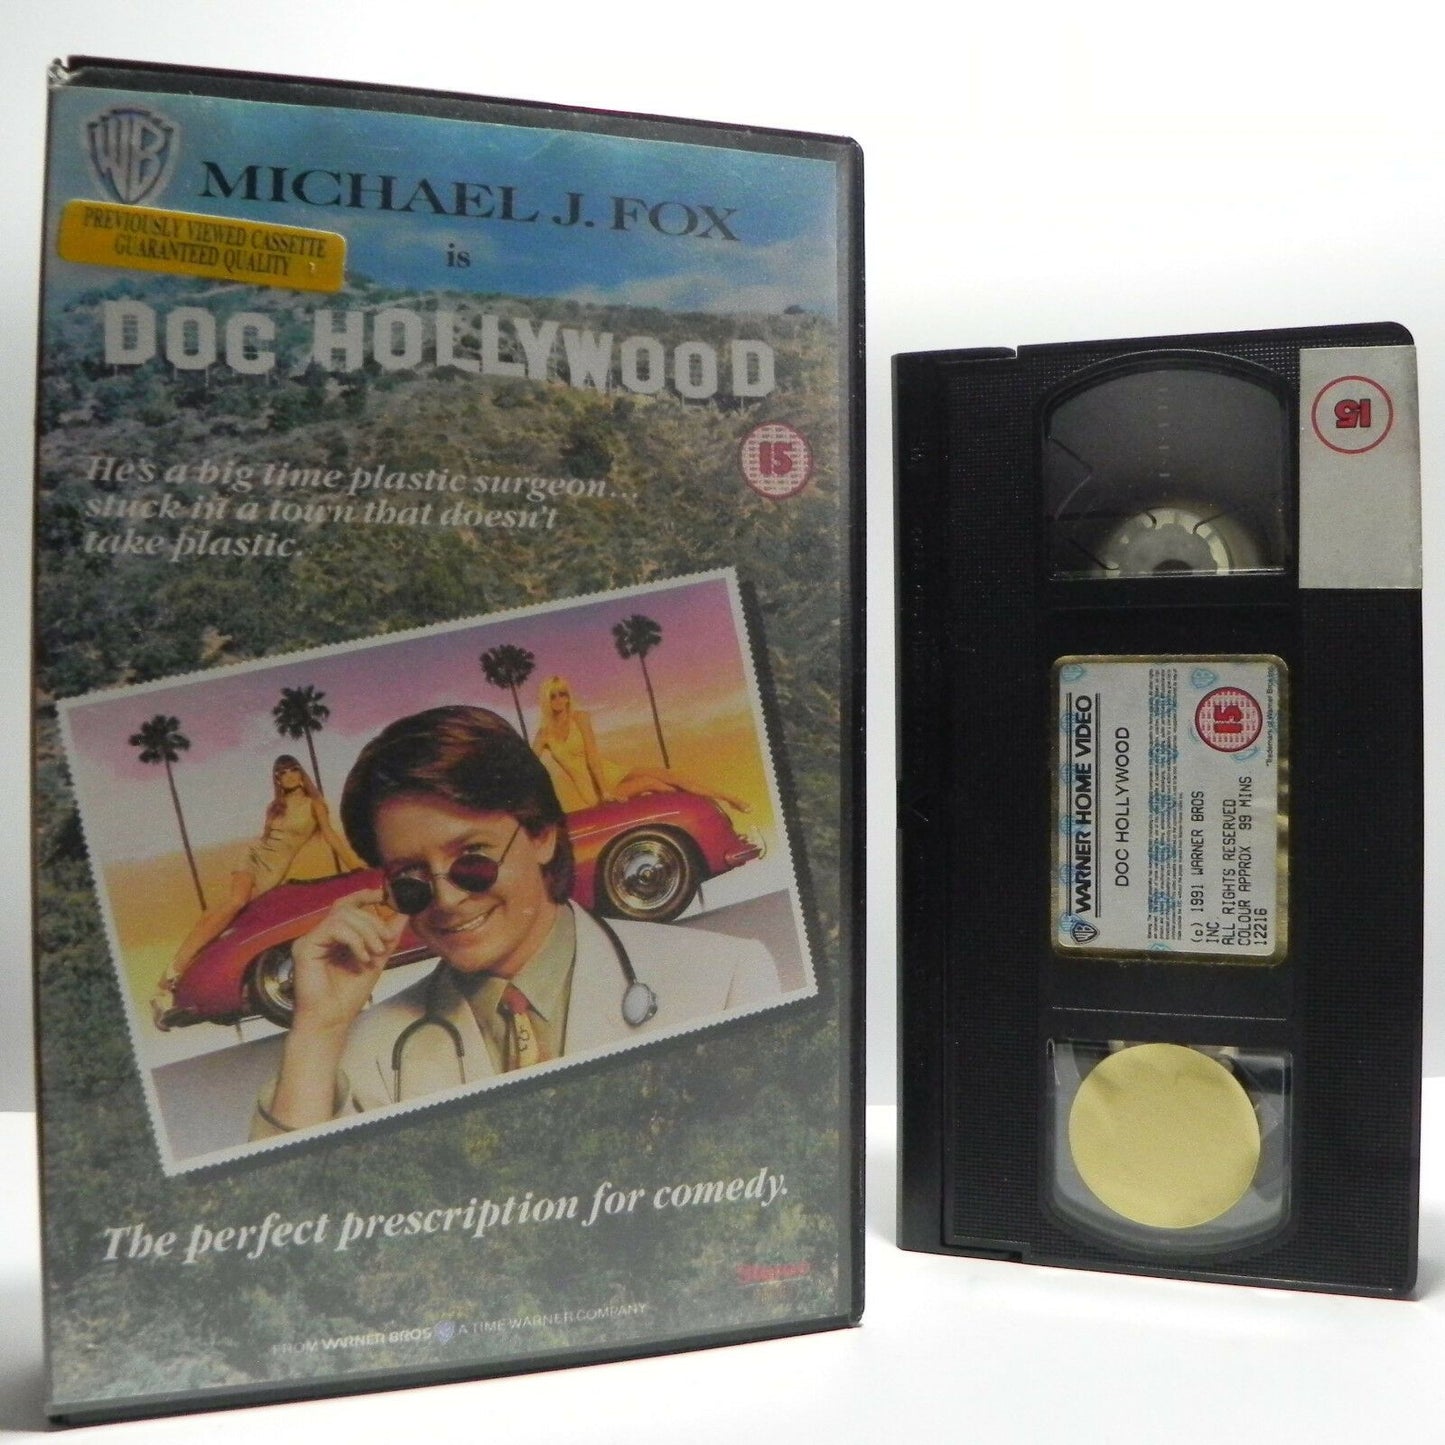 Doc Hollywood: Warner Large Box - Ex-Rental - Comedy - Michael J.Fox - Pal VHS-